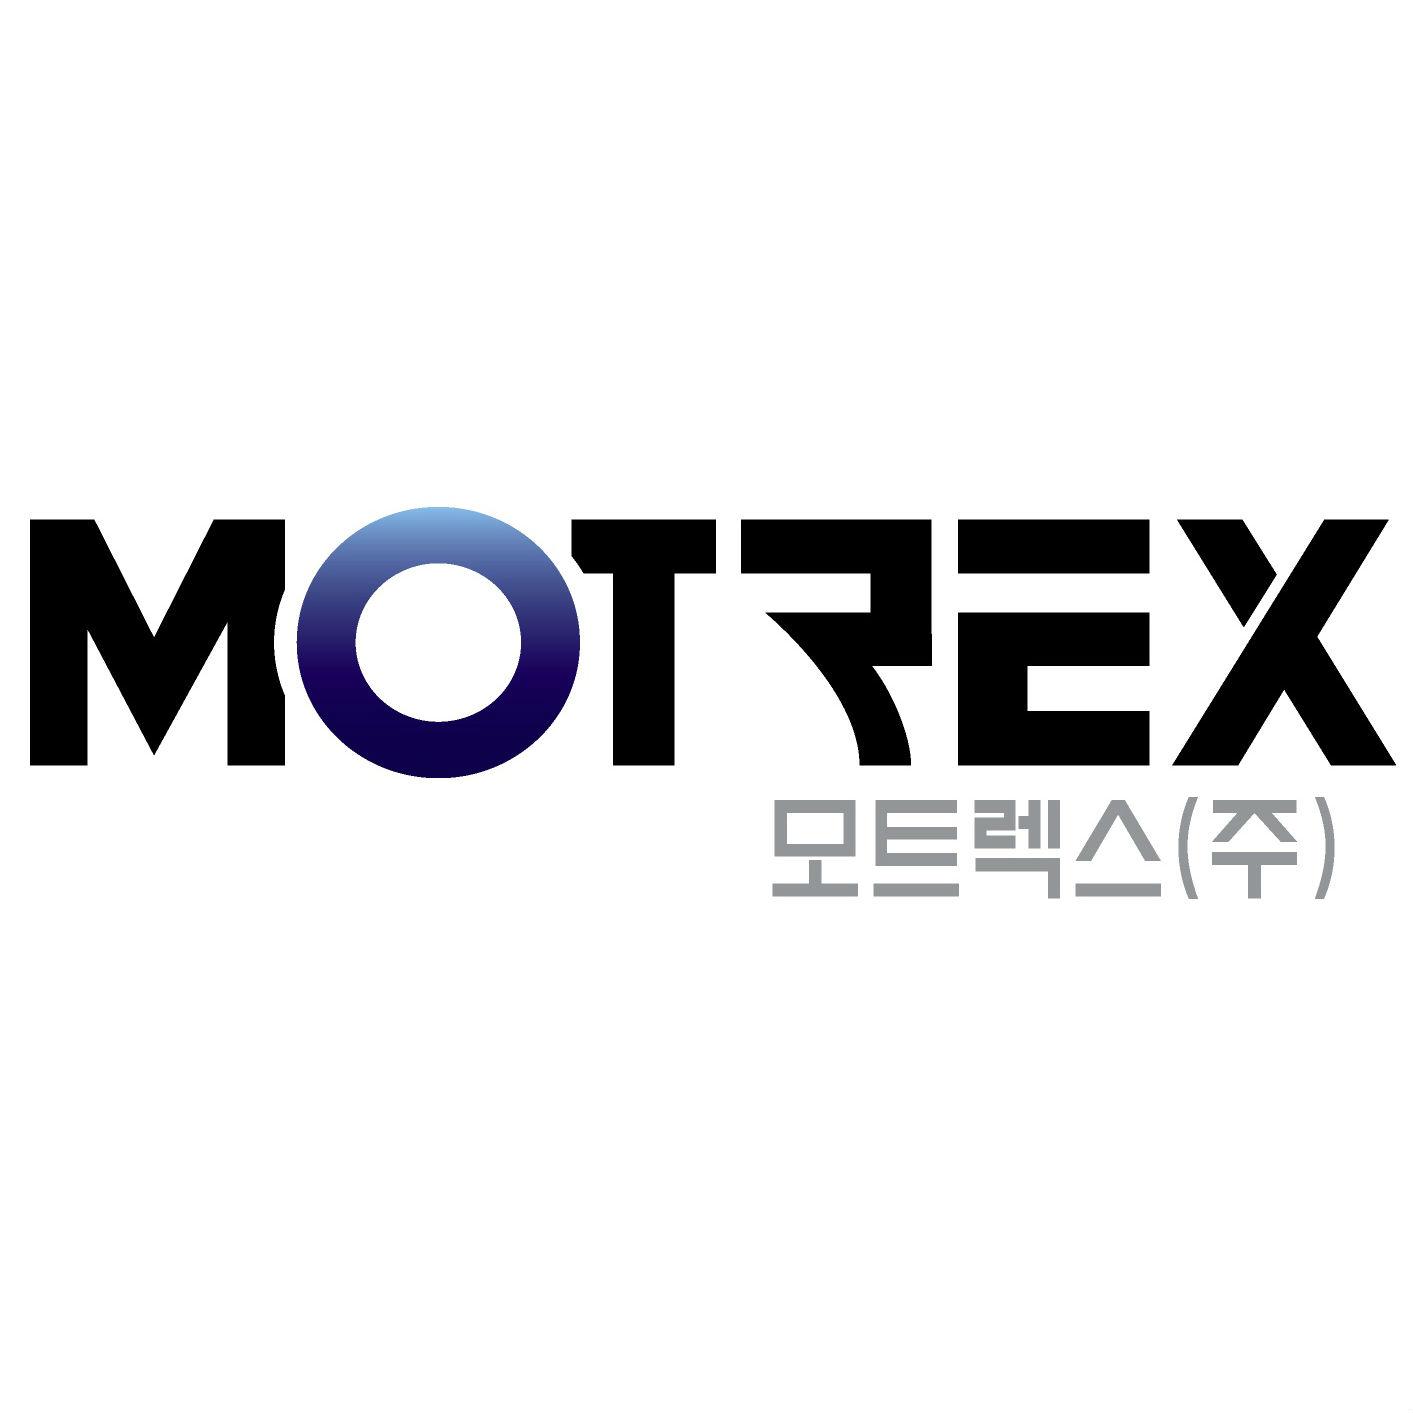 Motrex logo image